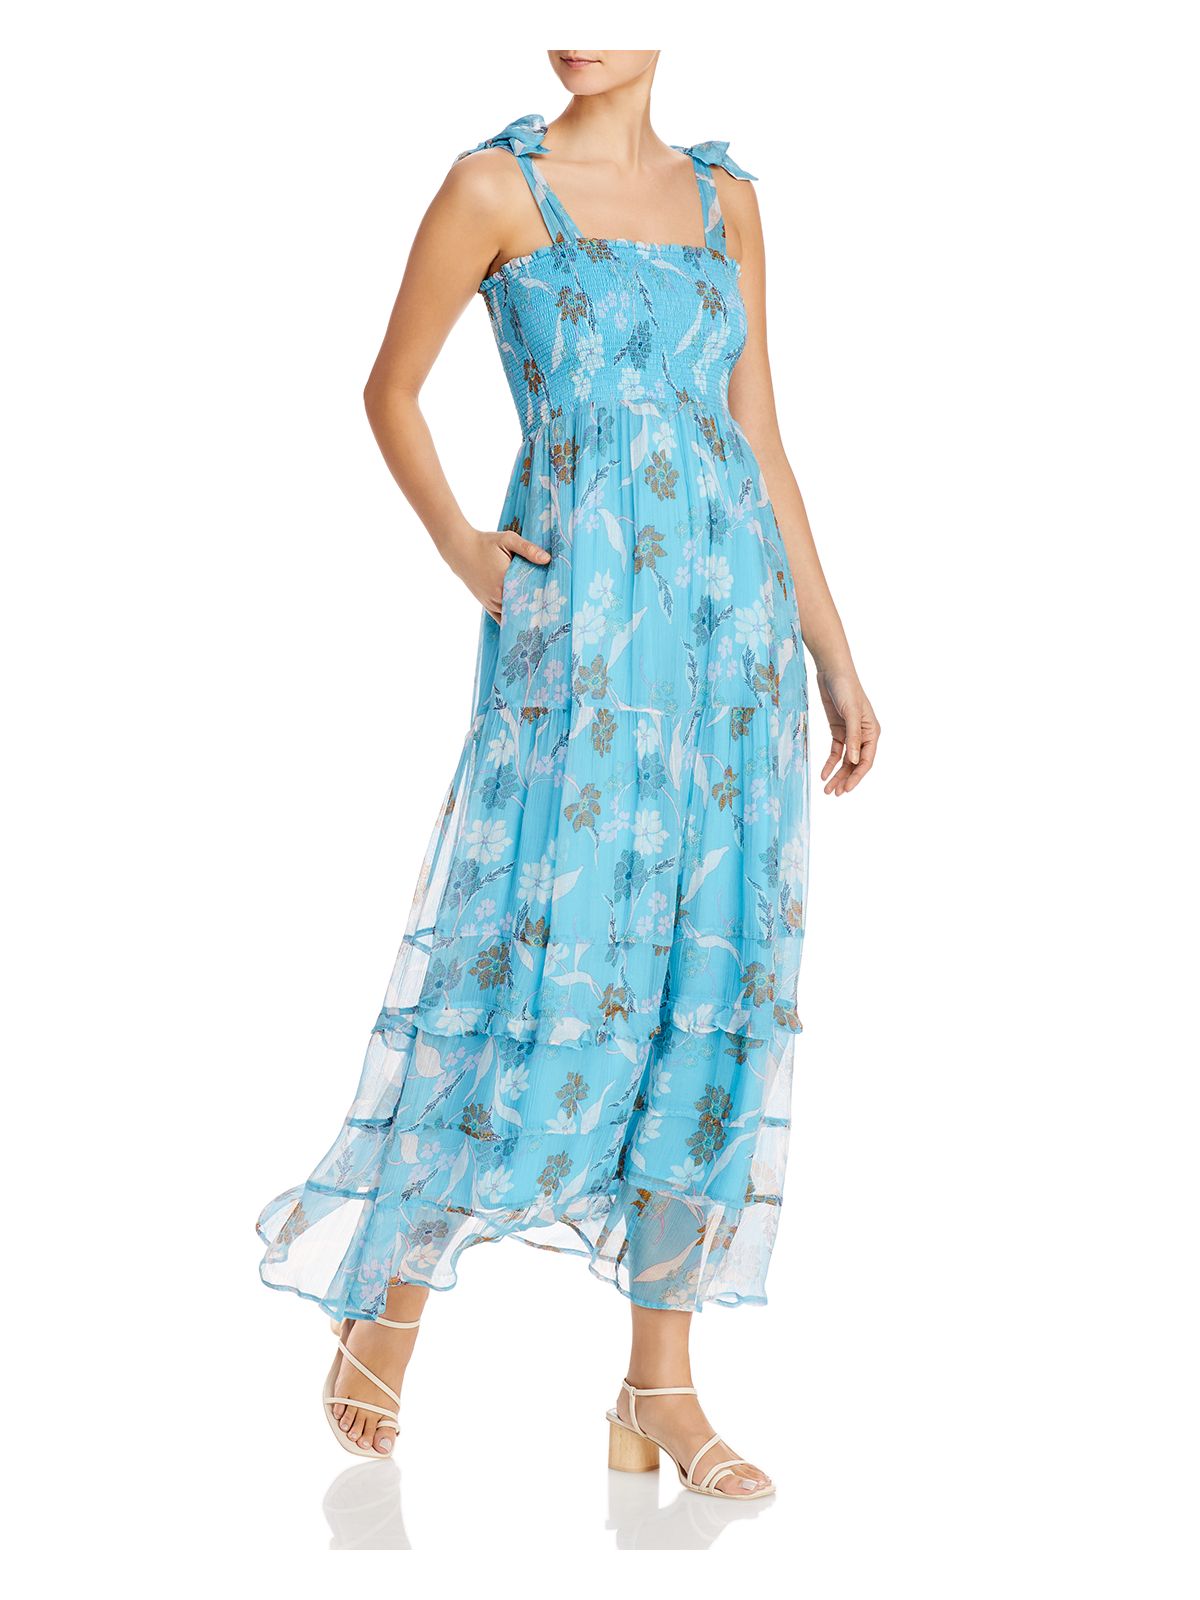 DOLAN Womens Aqua Smocked Tie Ruffled Floral Sleeveless Square Neck Maxi Evening Dress XS